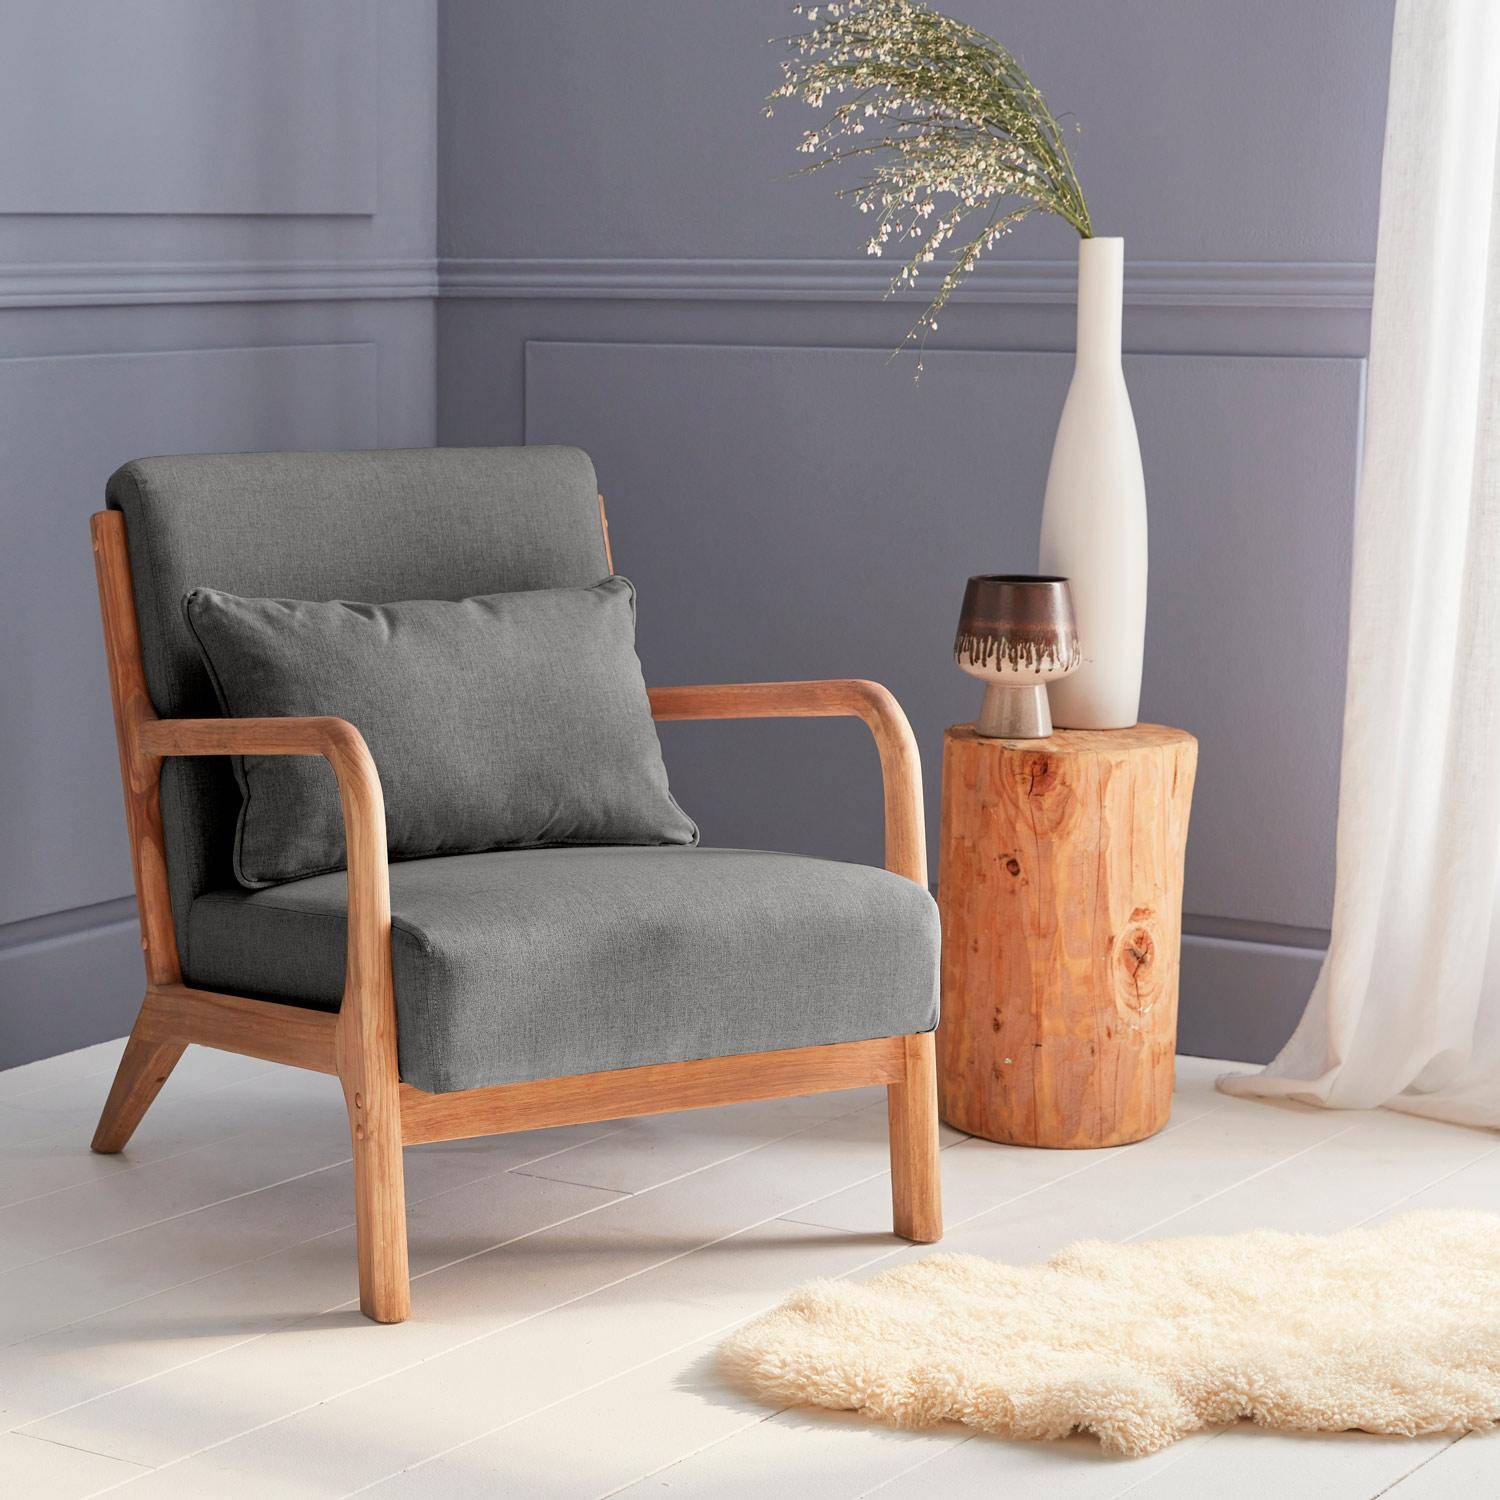 Sillón de diseño de madera y tela, 1 asiento recto fijo, patas de compás escandinavas, armazón de madera maciza, asiento cómodo, gris oscuro,sweeek,Photo1